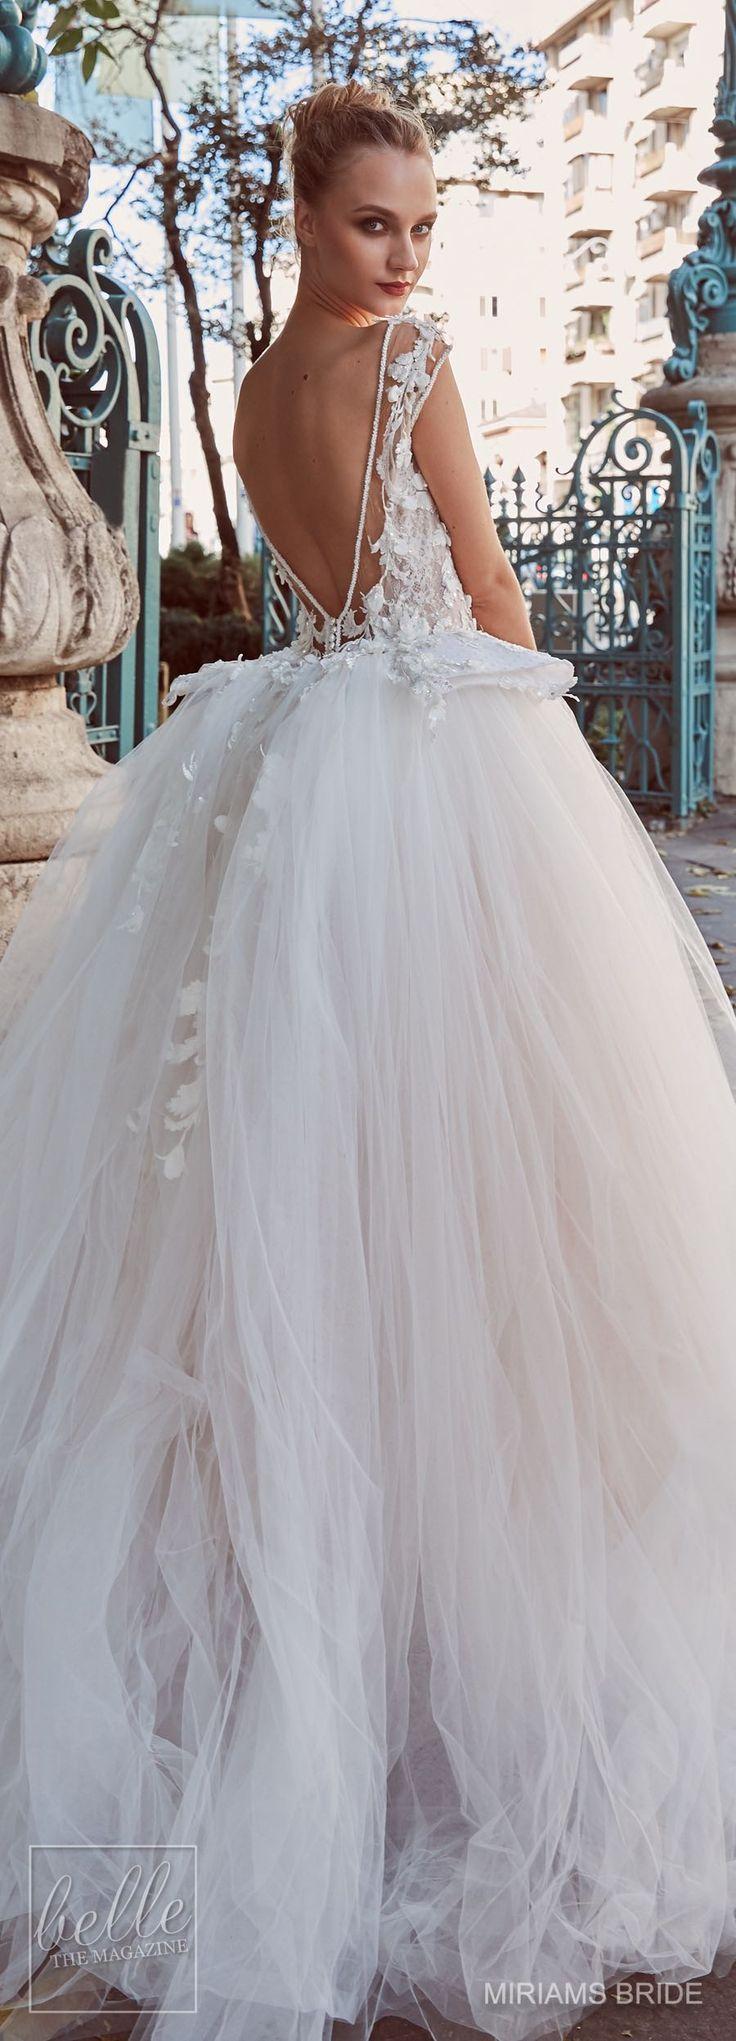 زفاف - Wedding Dresses By Miriams Bride 2018 Collection